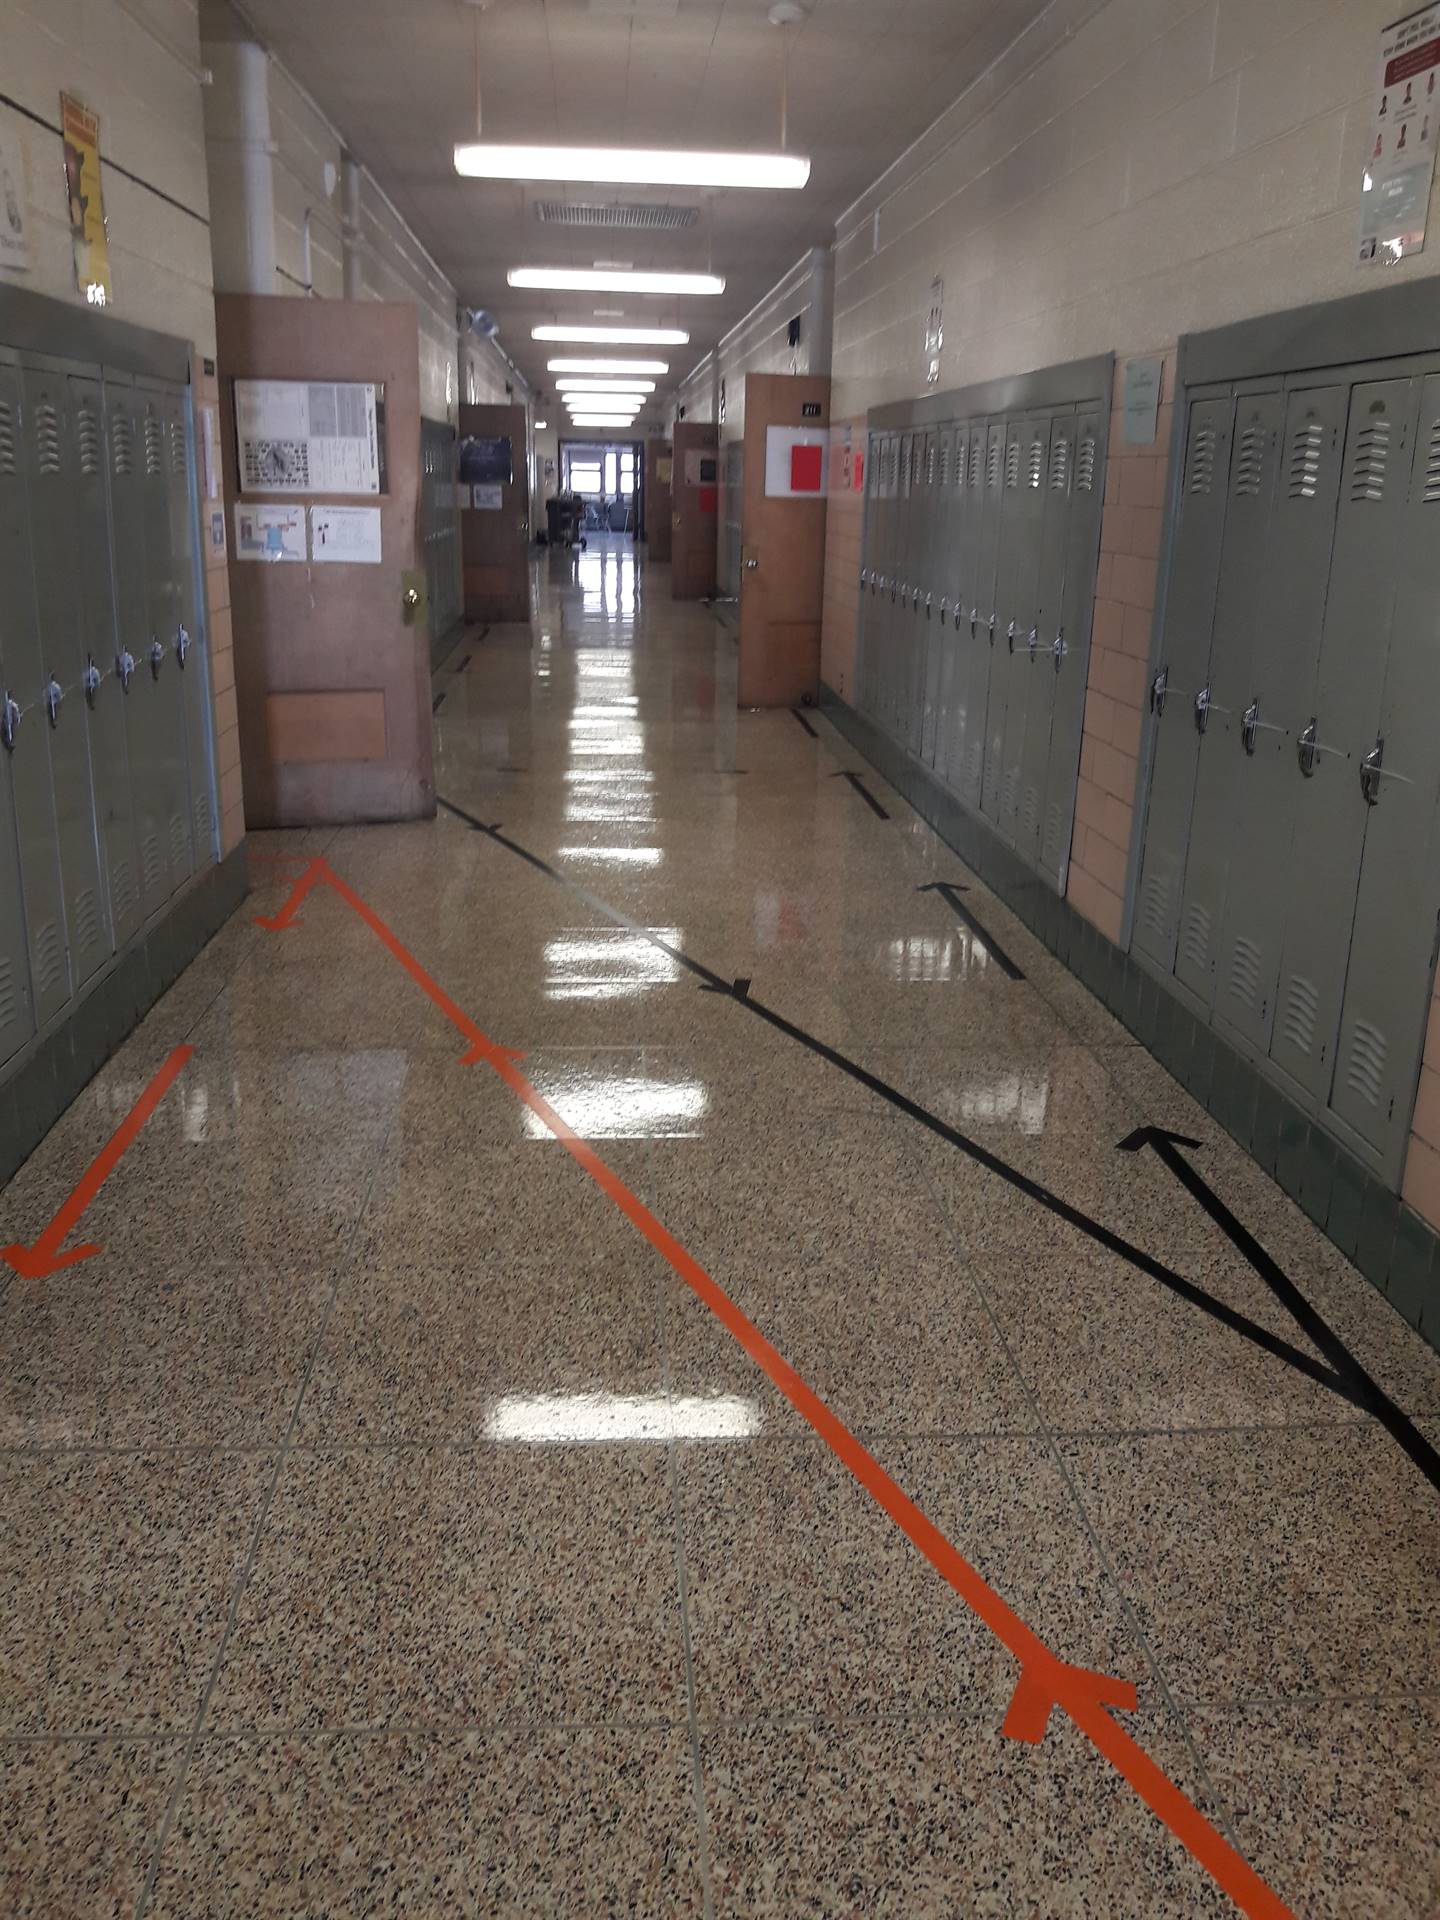 7th/8th Grade Hallway